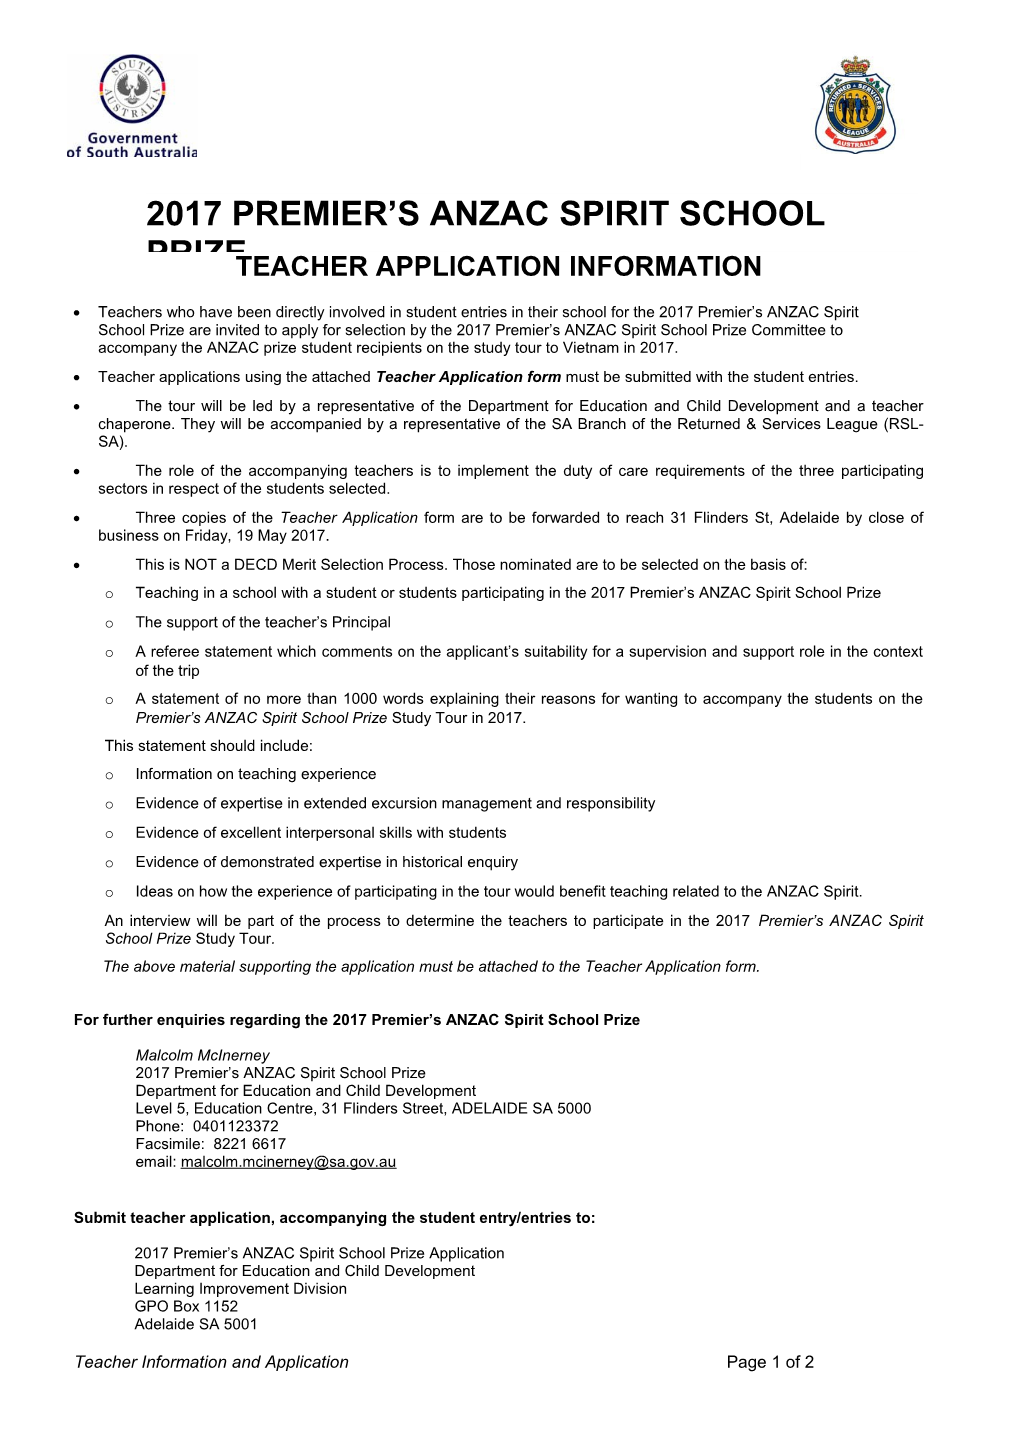 Teacher Application Information - 2017 Premier's ANZAC Spirit School Prize